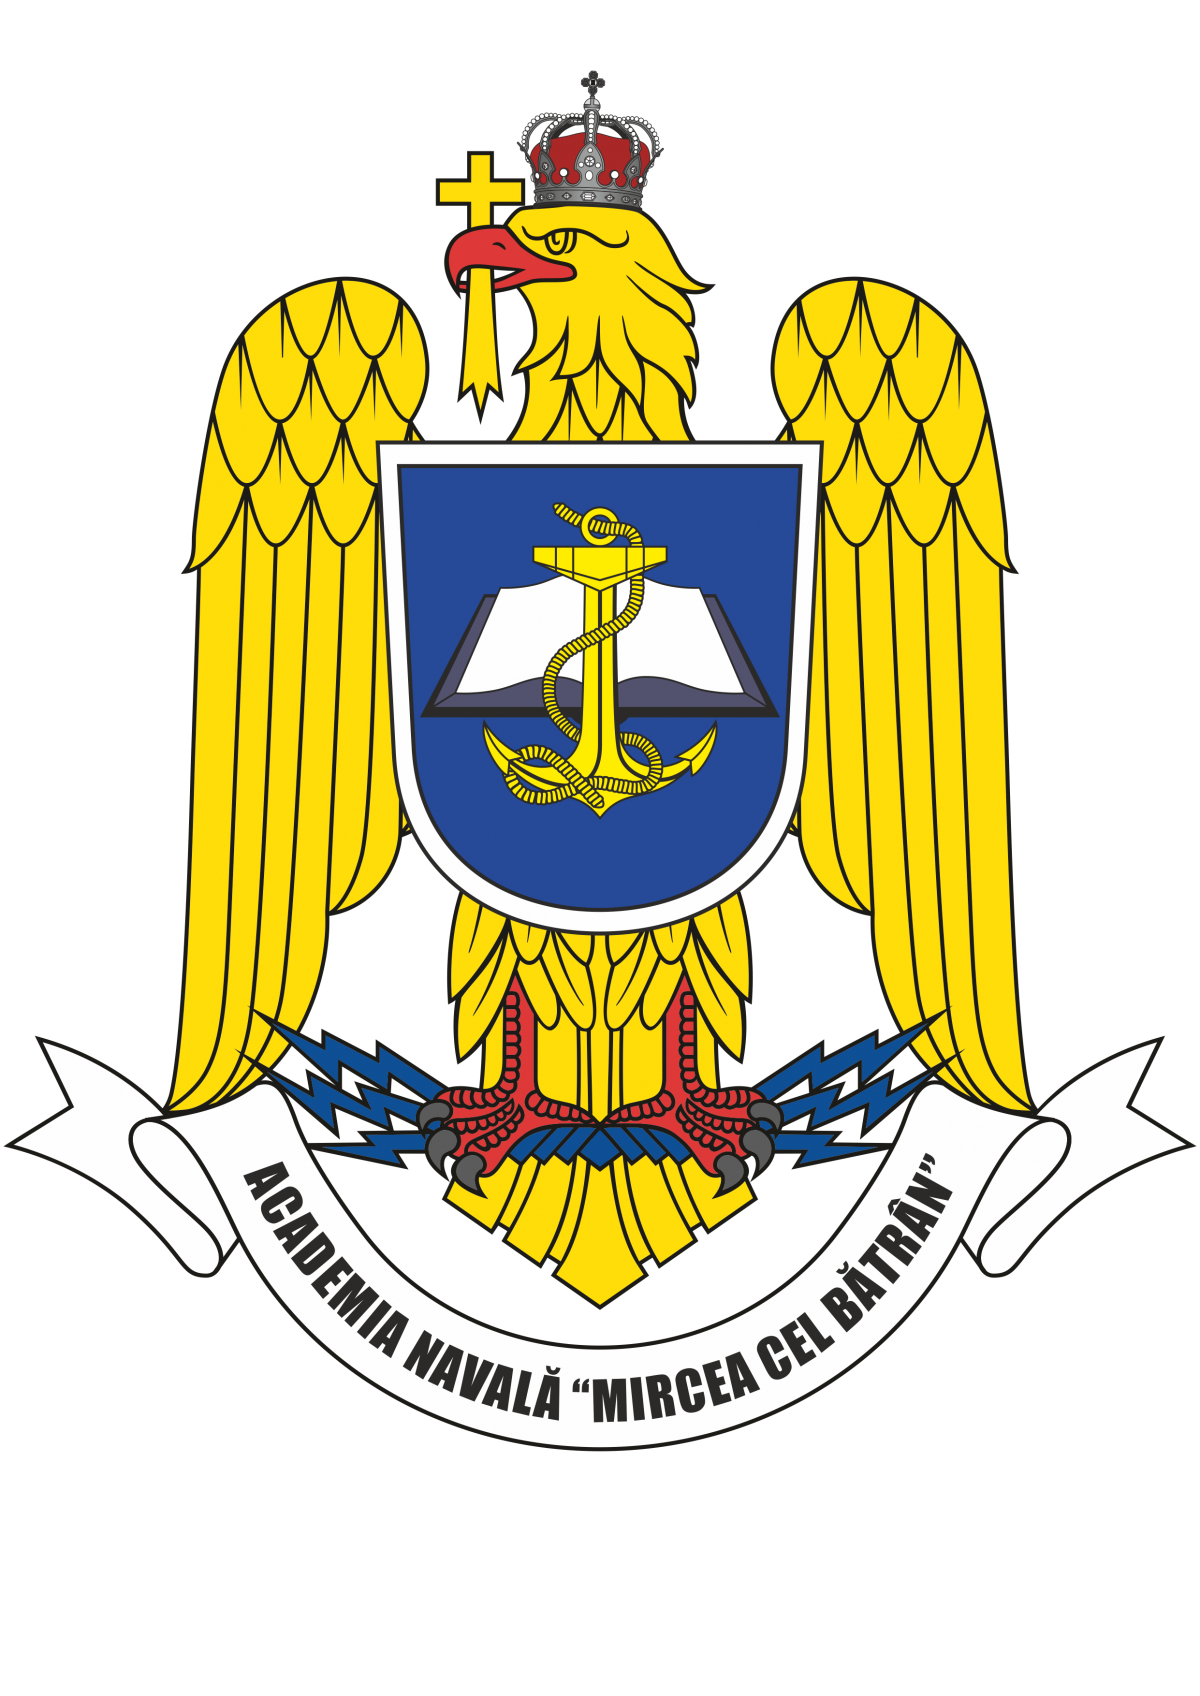 Naval Academy Mircea cel Bătrân, Romanian Navy - Stemă - coat of arms -  crest of Naval Academy Mircea cel Bătrân, Romanian Navy